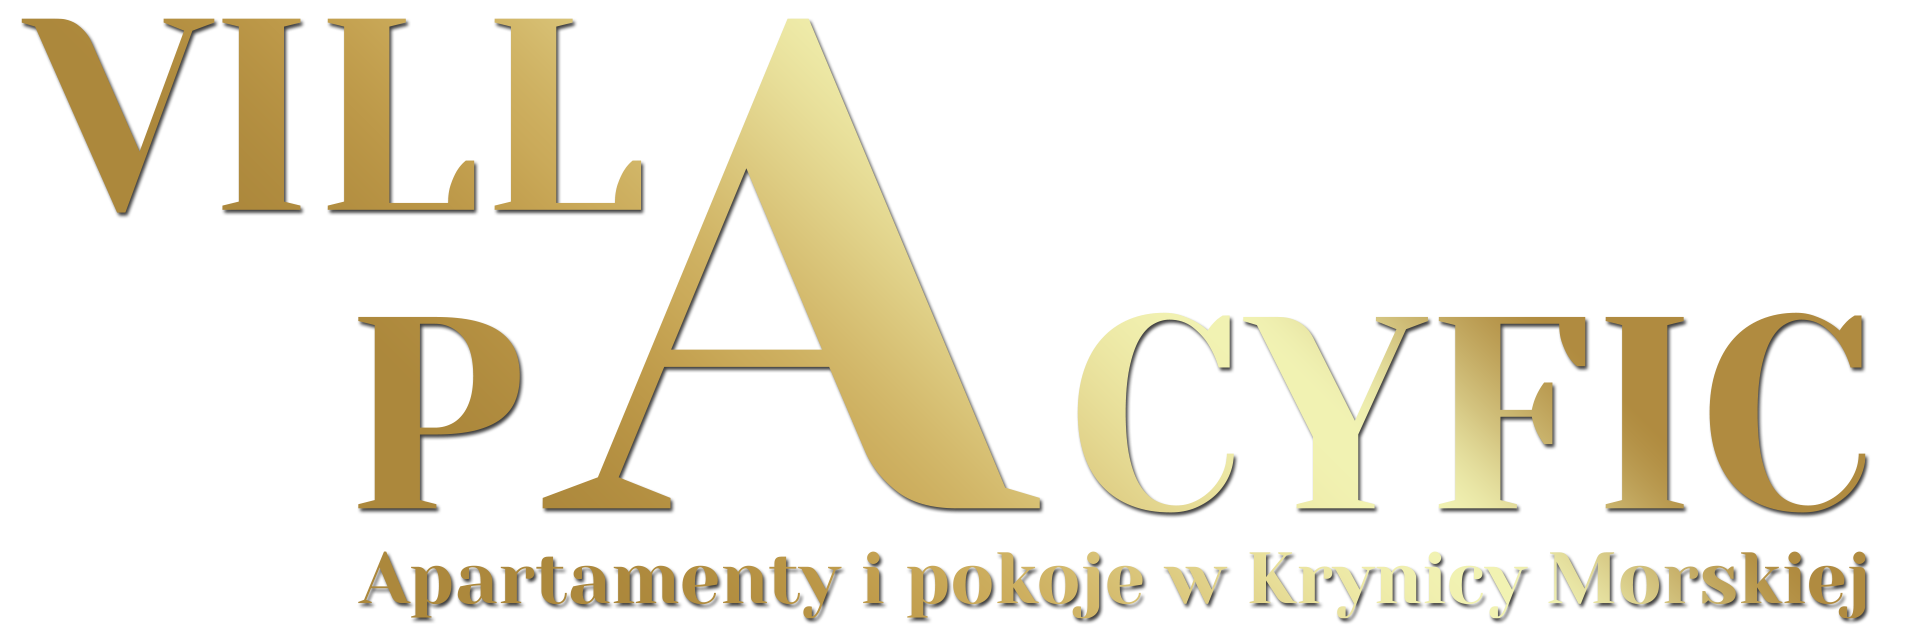 Logo Villa Pacyfic